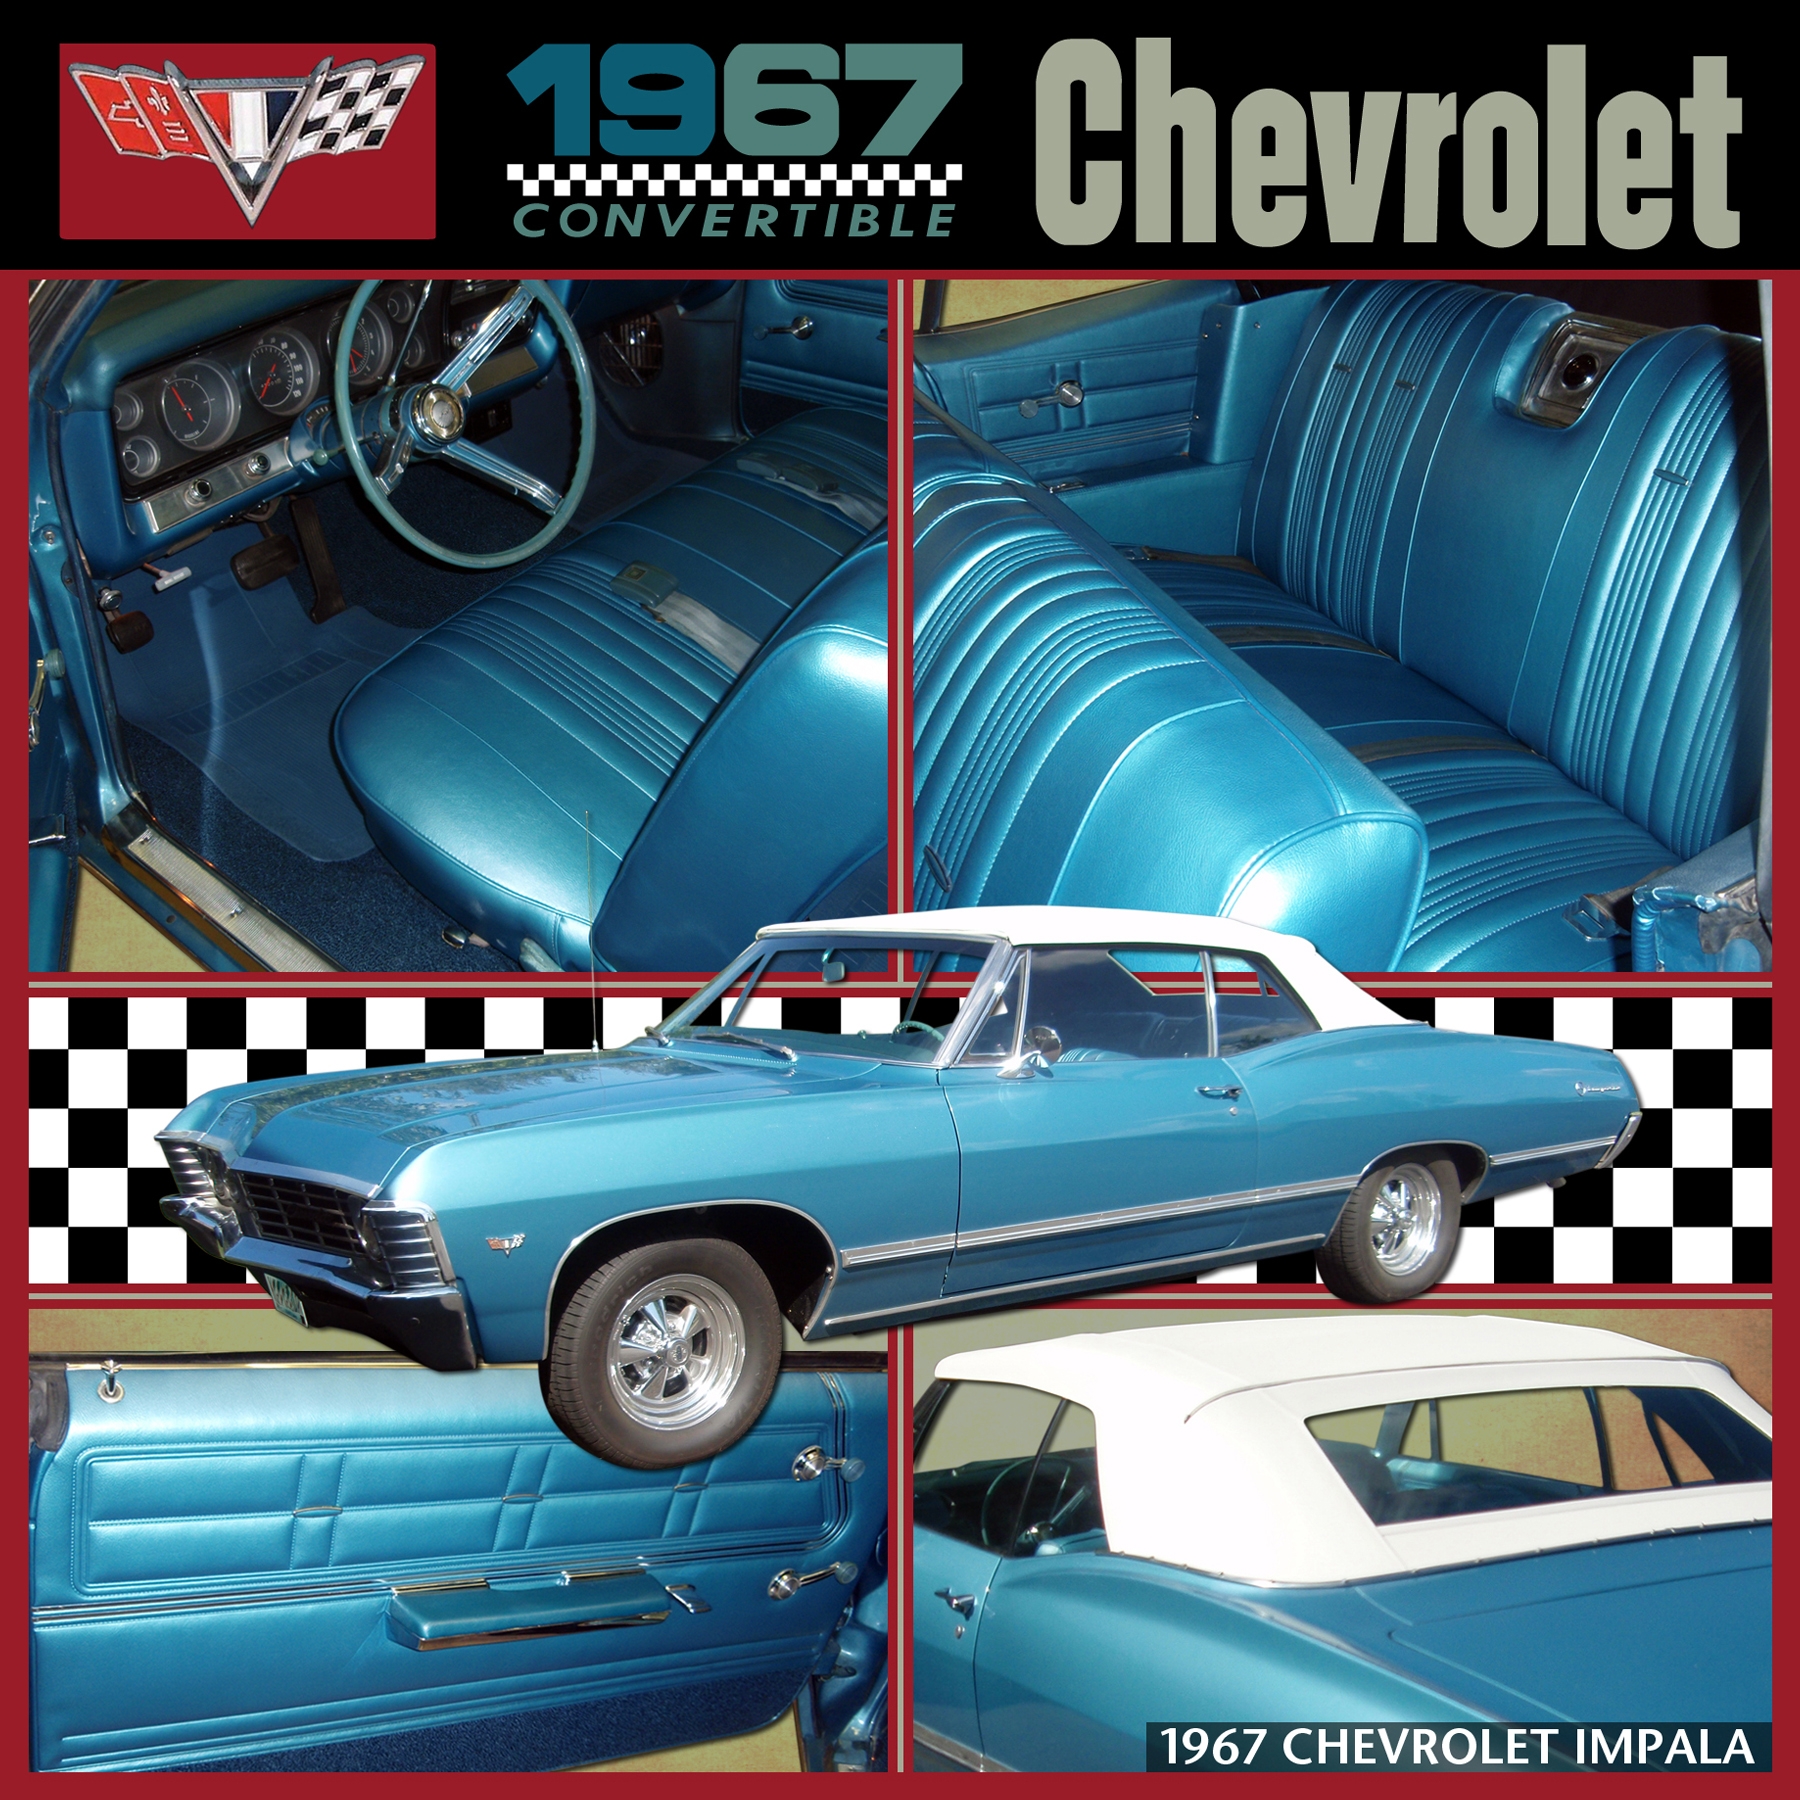 1967 Chevrolet Impala - Vehicle Upholstery Renovation